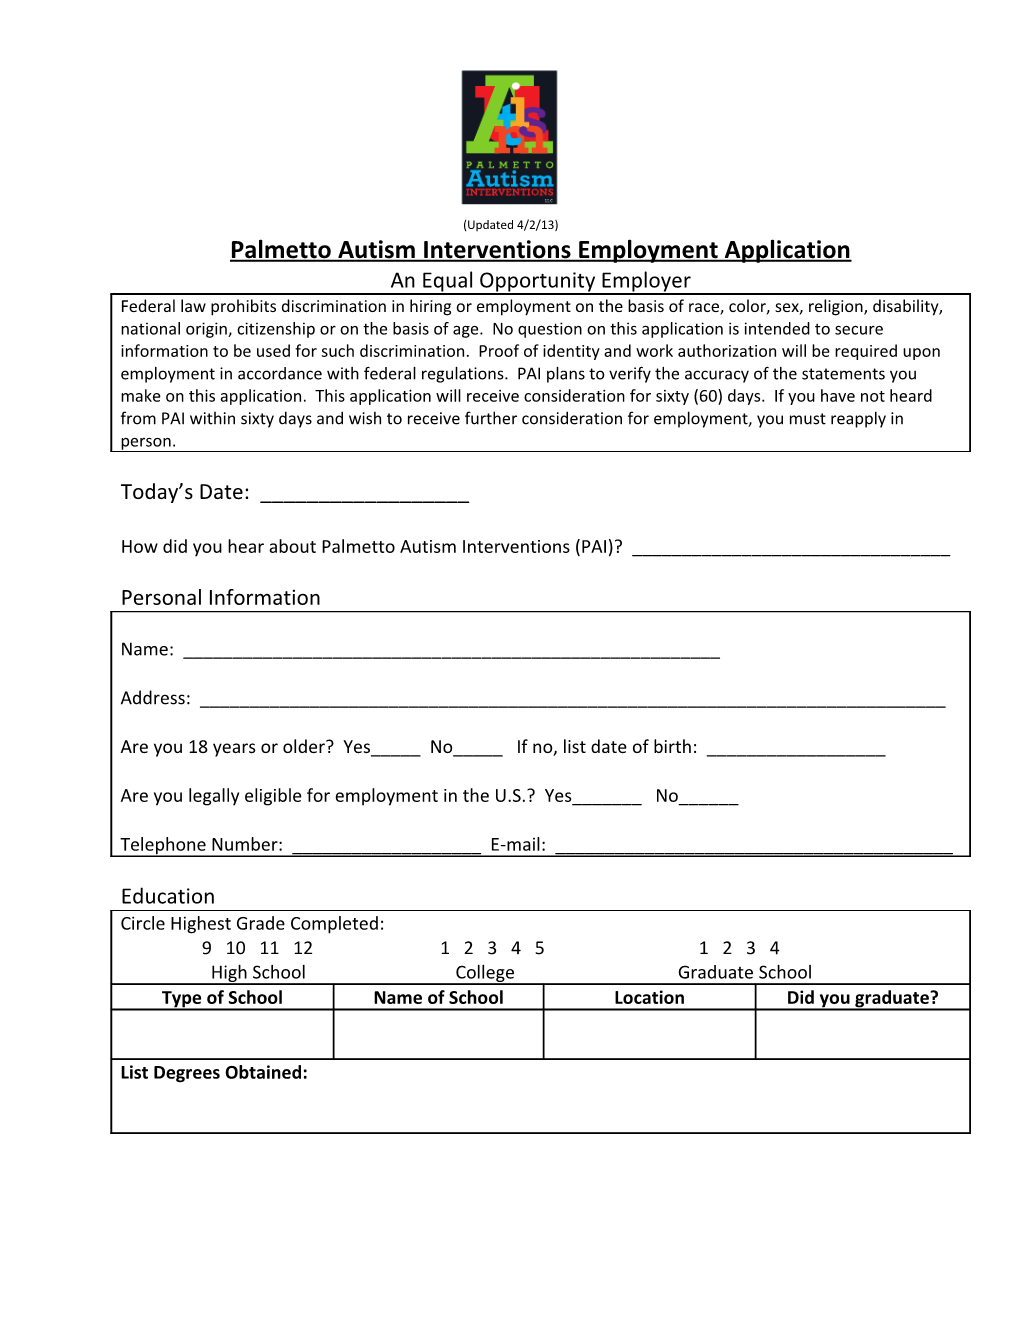 Palmetto Autism Interventions Employment Application